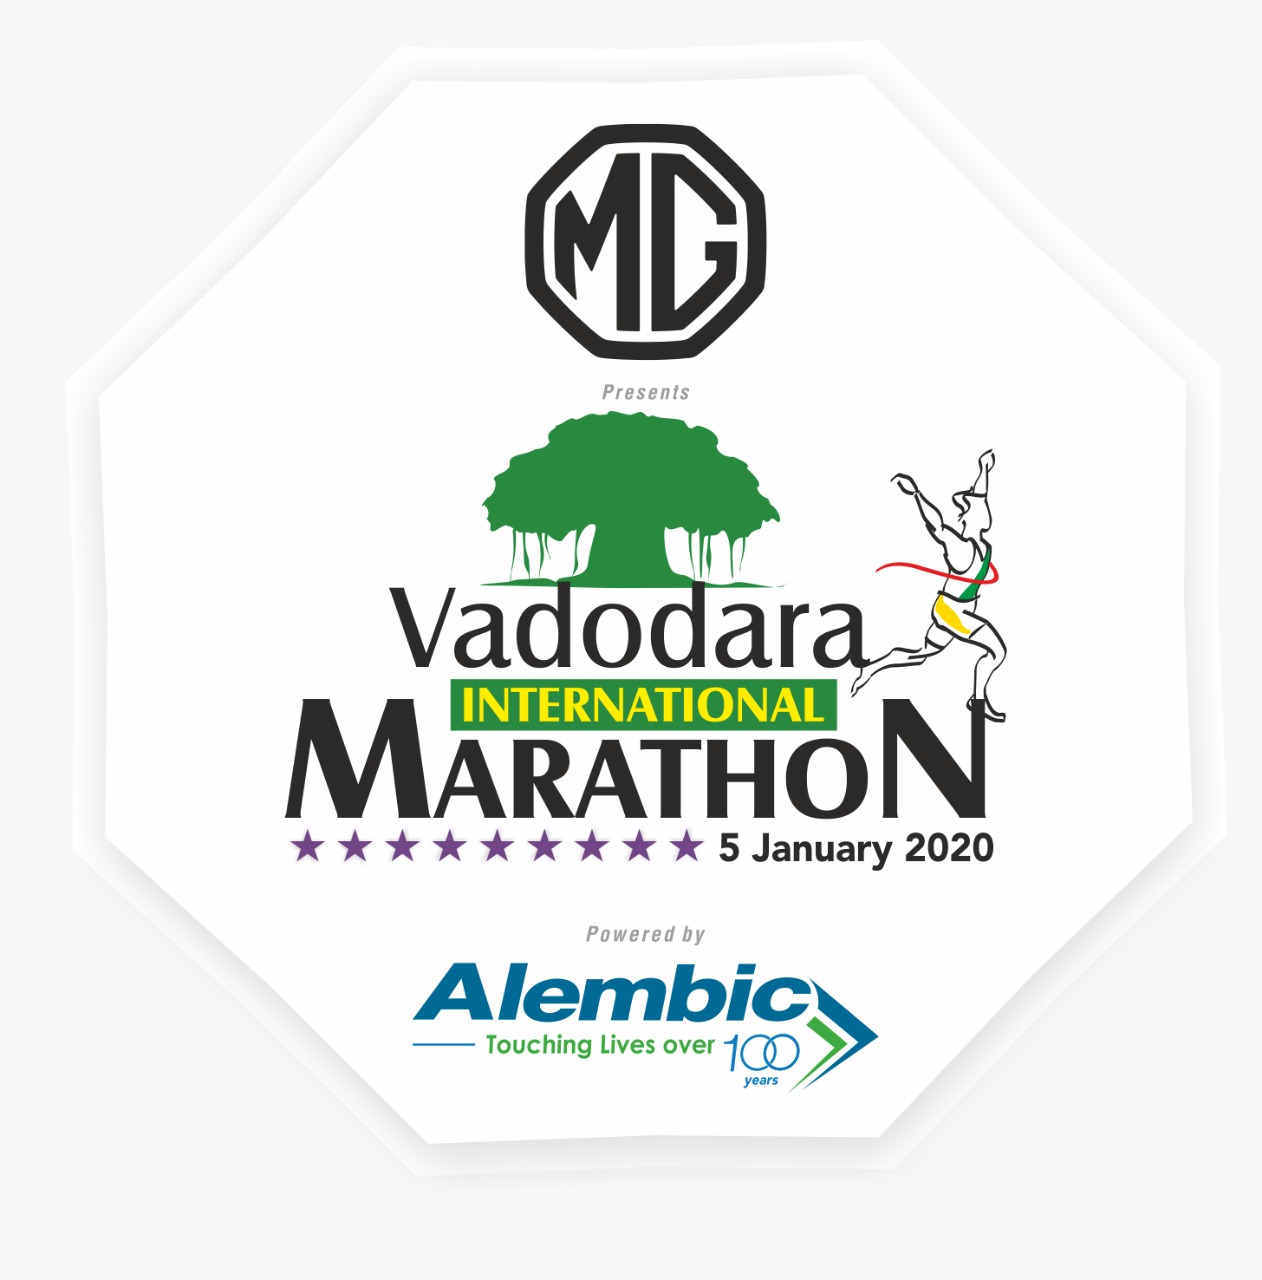 MG Vadodara International Marathon invited to be part of the Abbott World Marathon Majors Wanda Age Group Qualifying Events